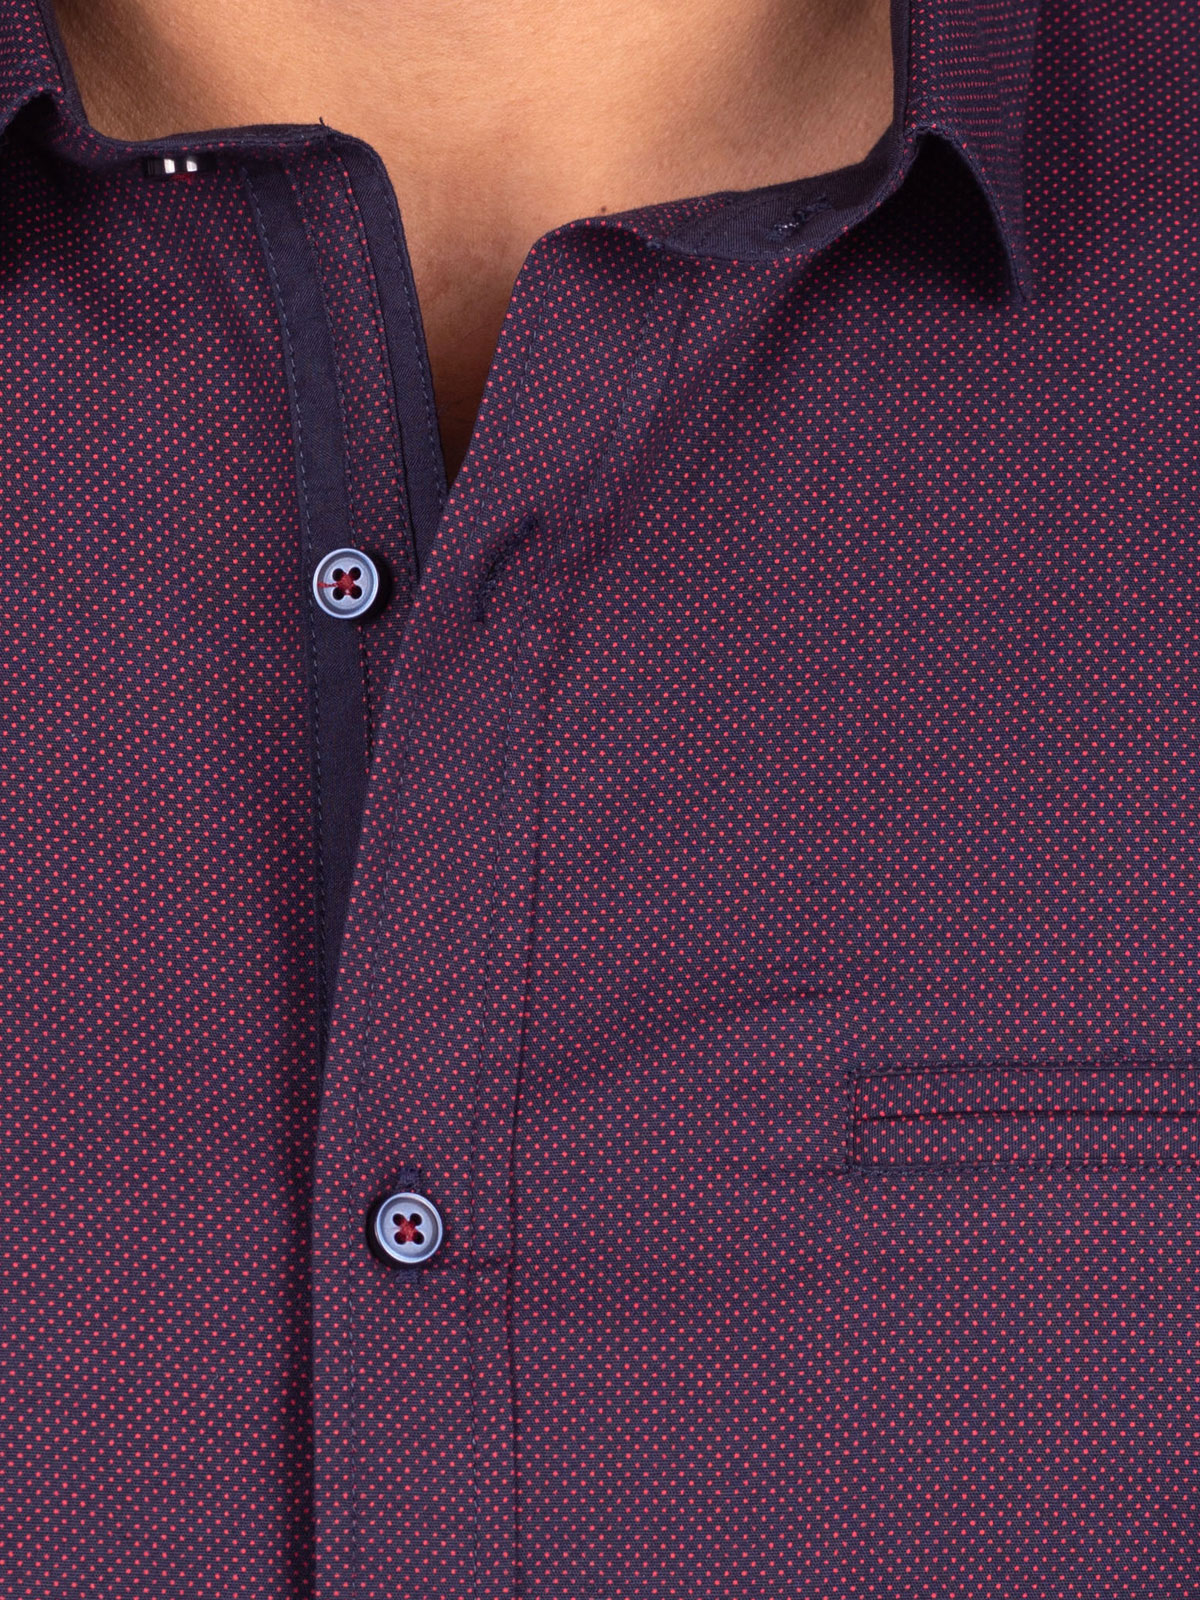 Navy blue shirt with purple polka dot pr - 21518 € 41.62 img3